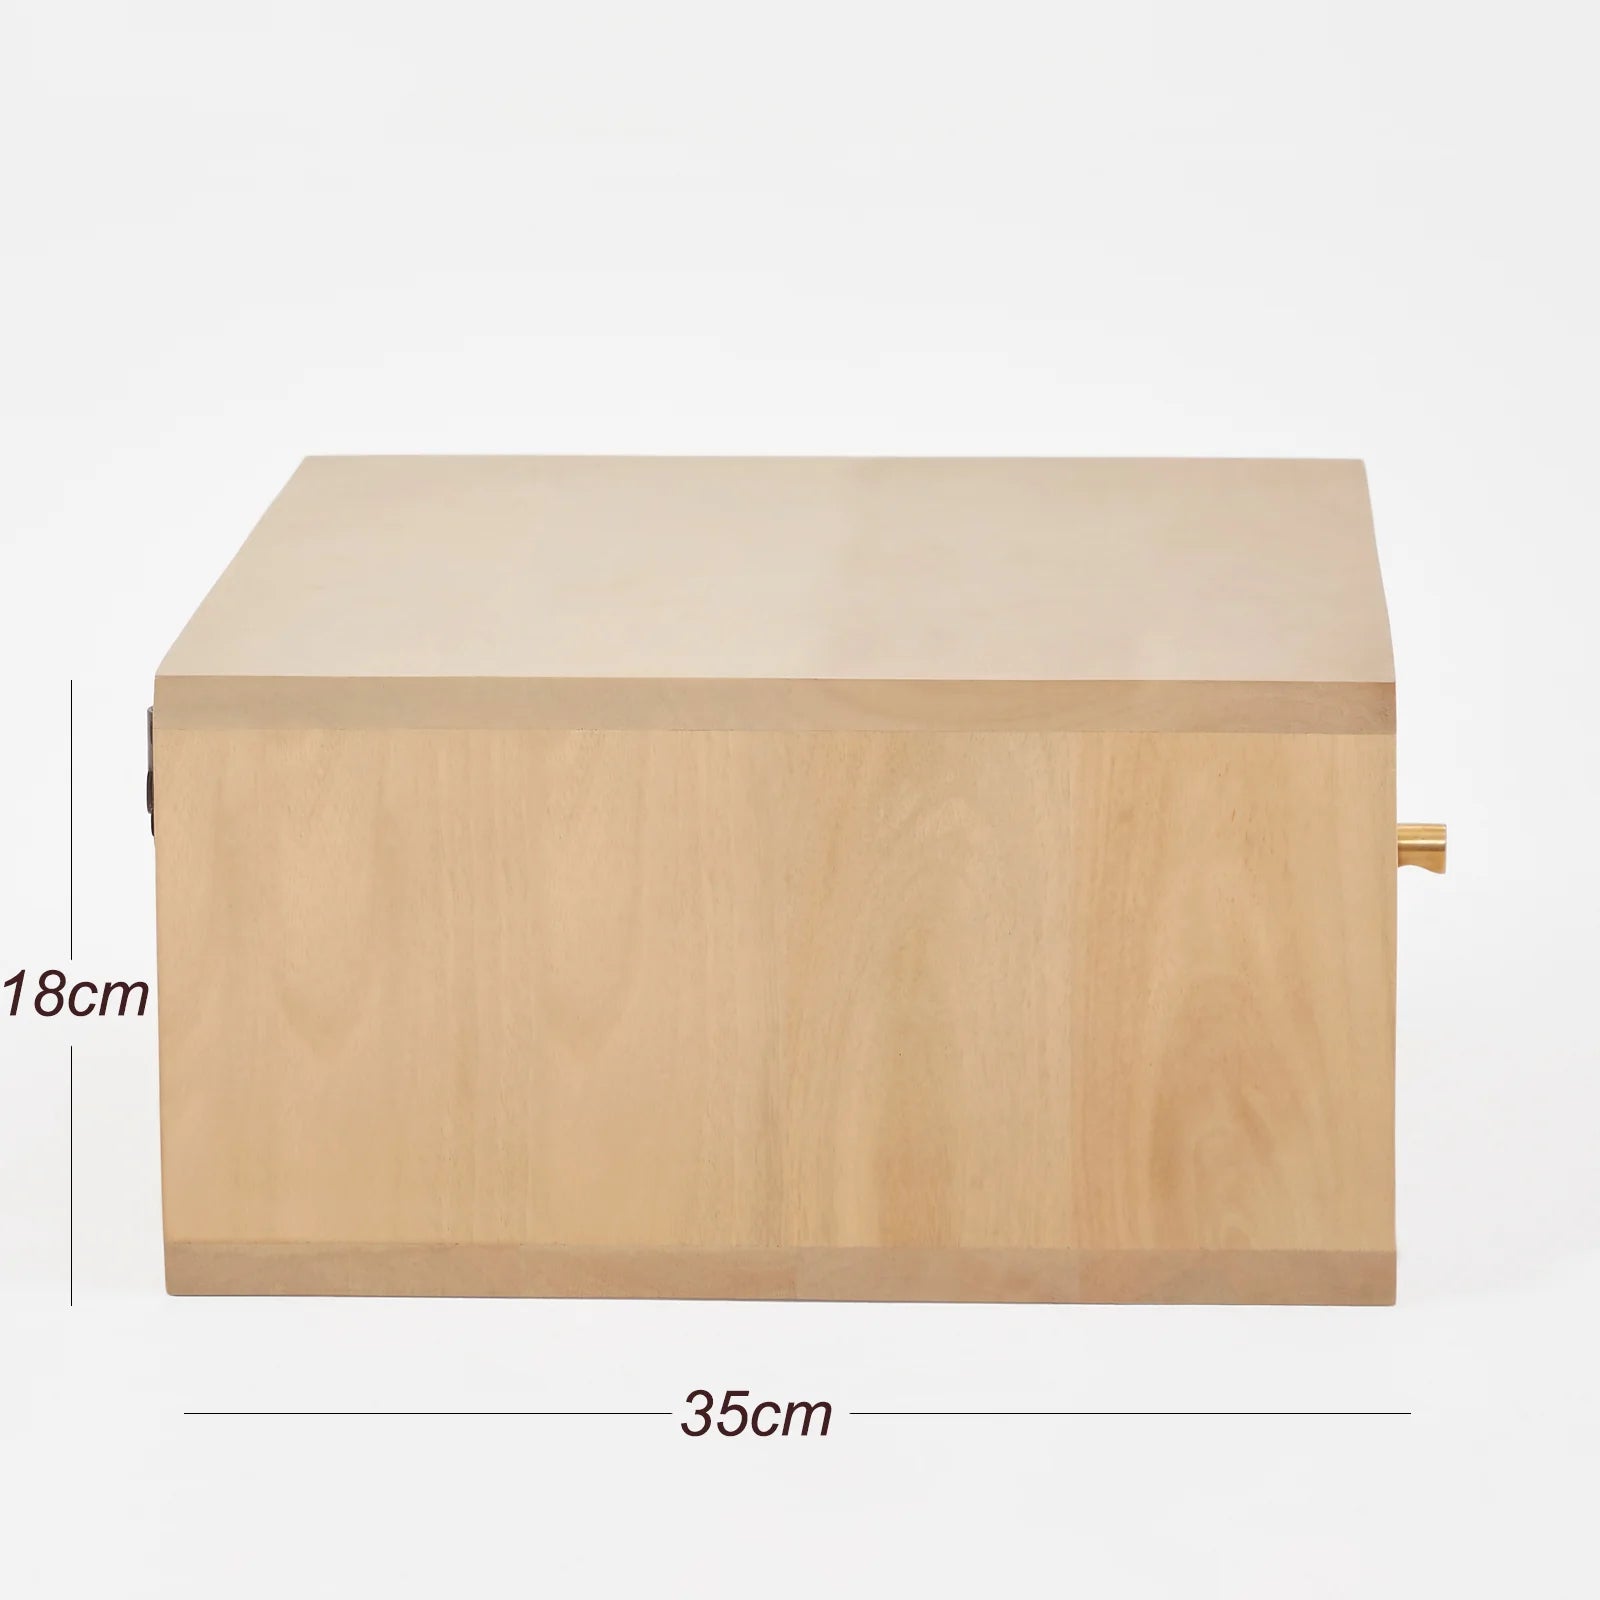 UNA Scandinavian oak solid wood floating bedside table | malletandplane.com